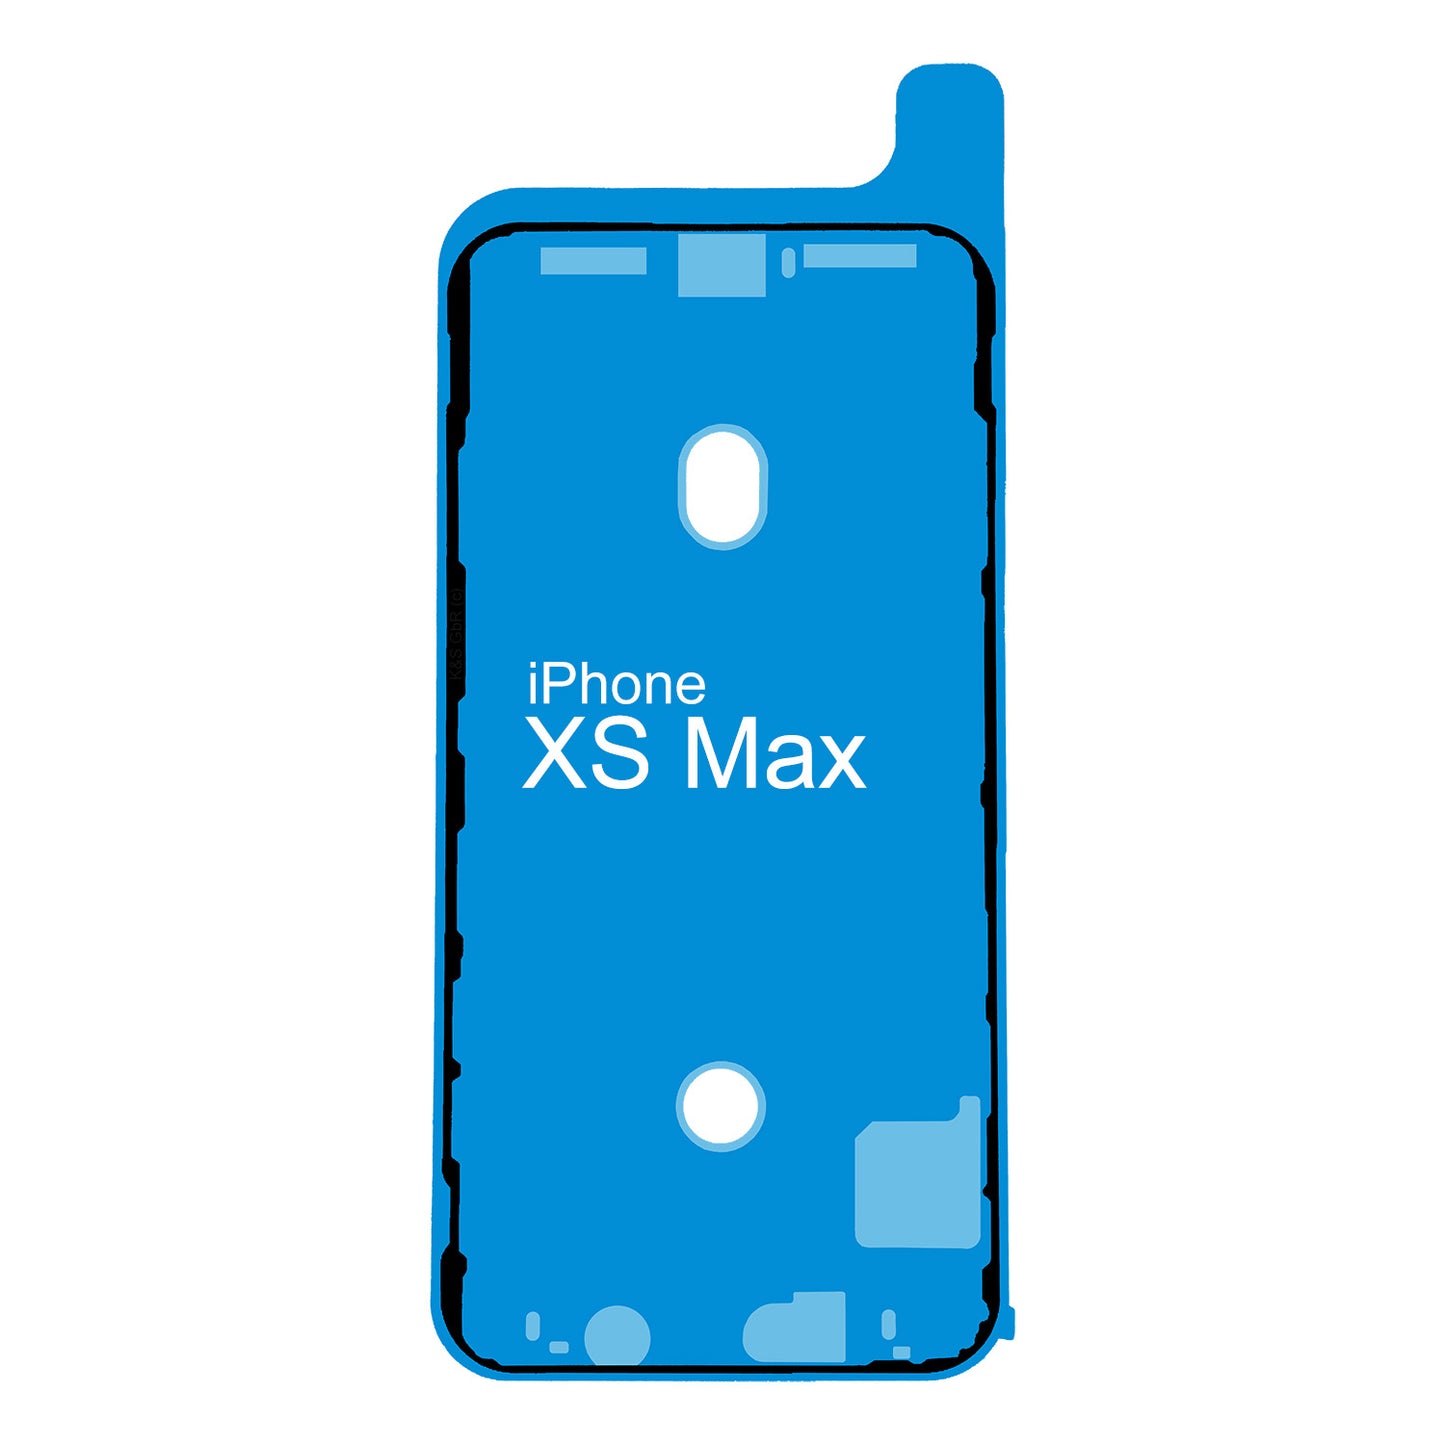 iPhone XS Max Rahmen Display LCD Kleber Klebepad Adhesive Wasser Dichtung Kleberahmen Rahmenkleber Schwarz